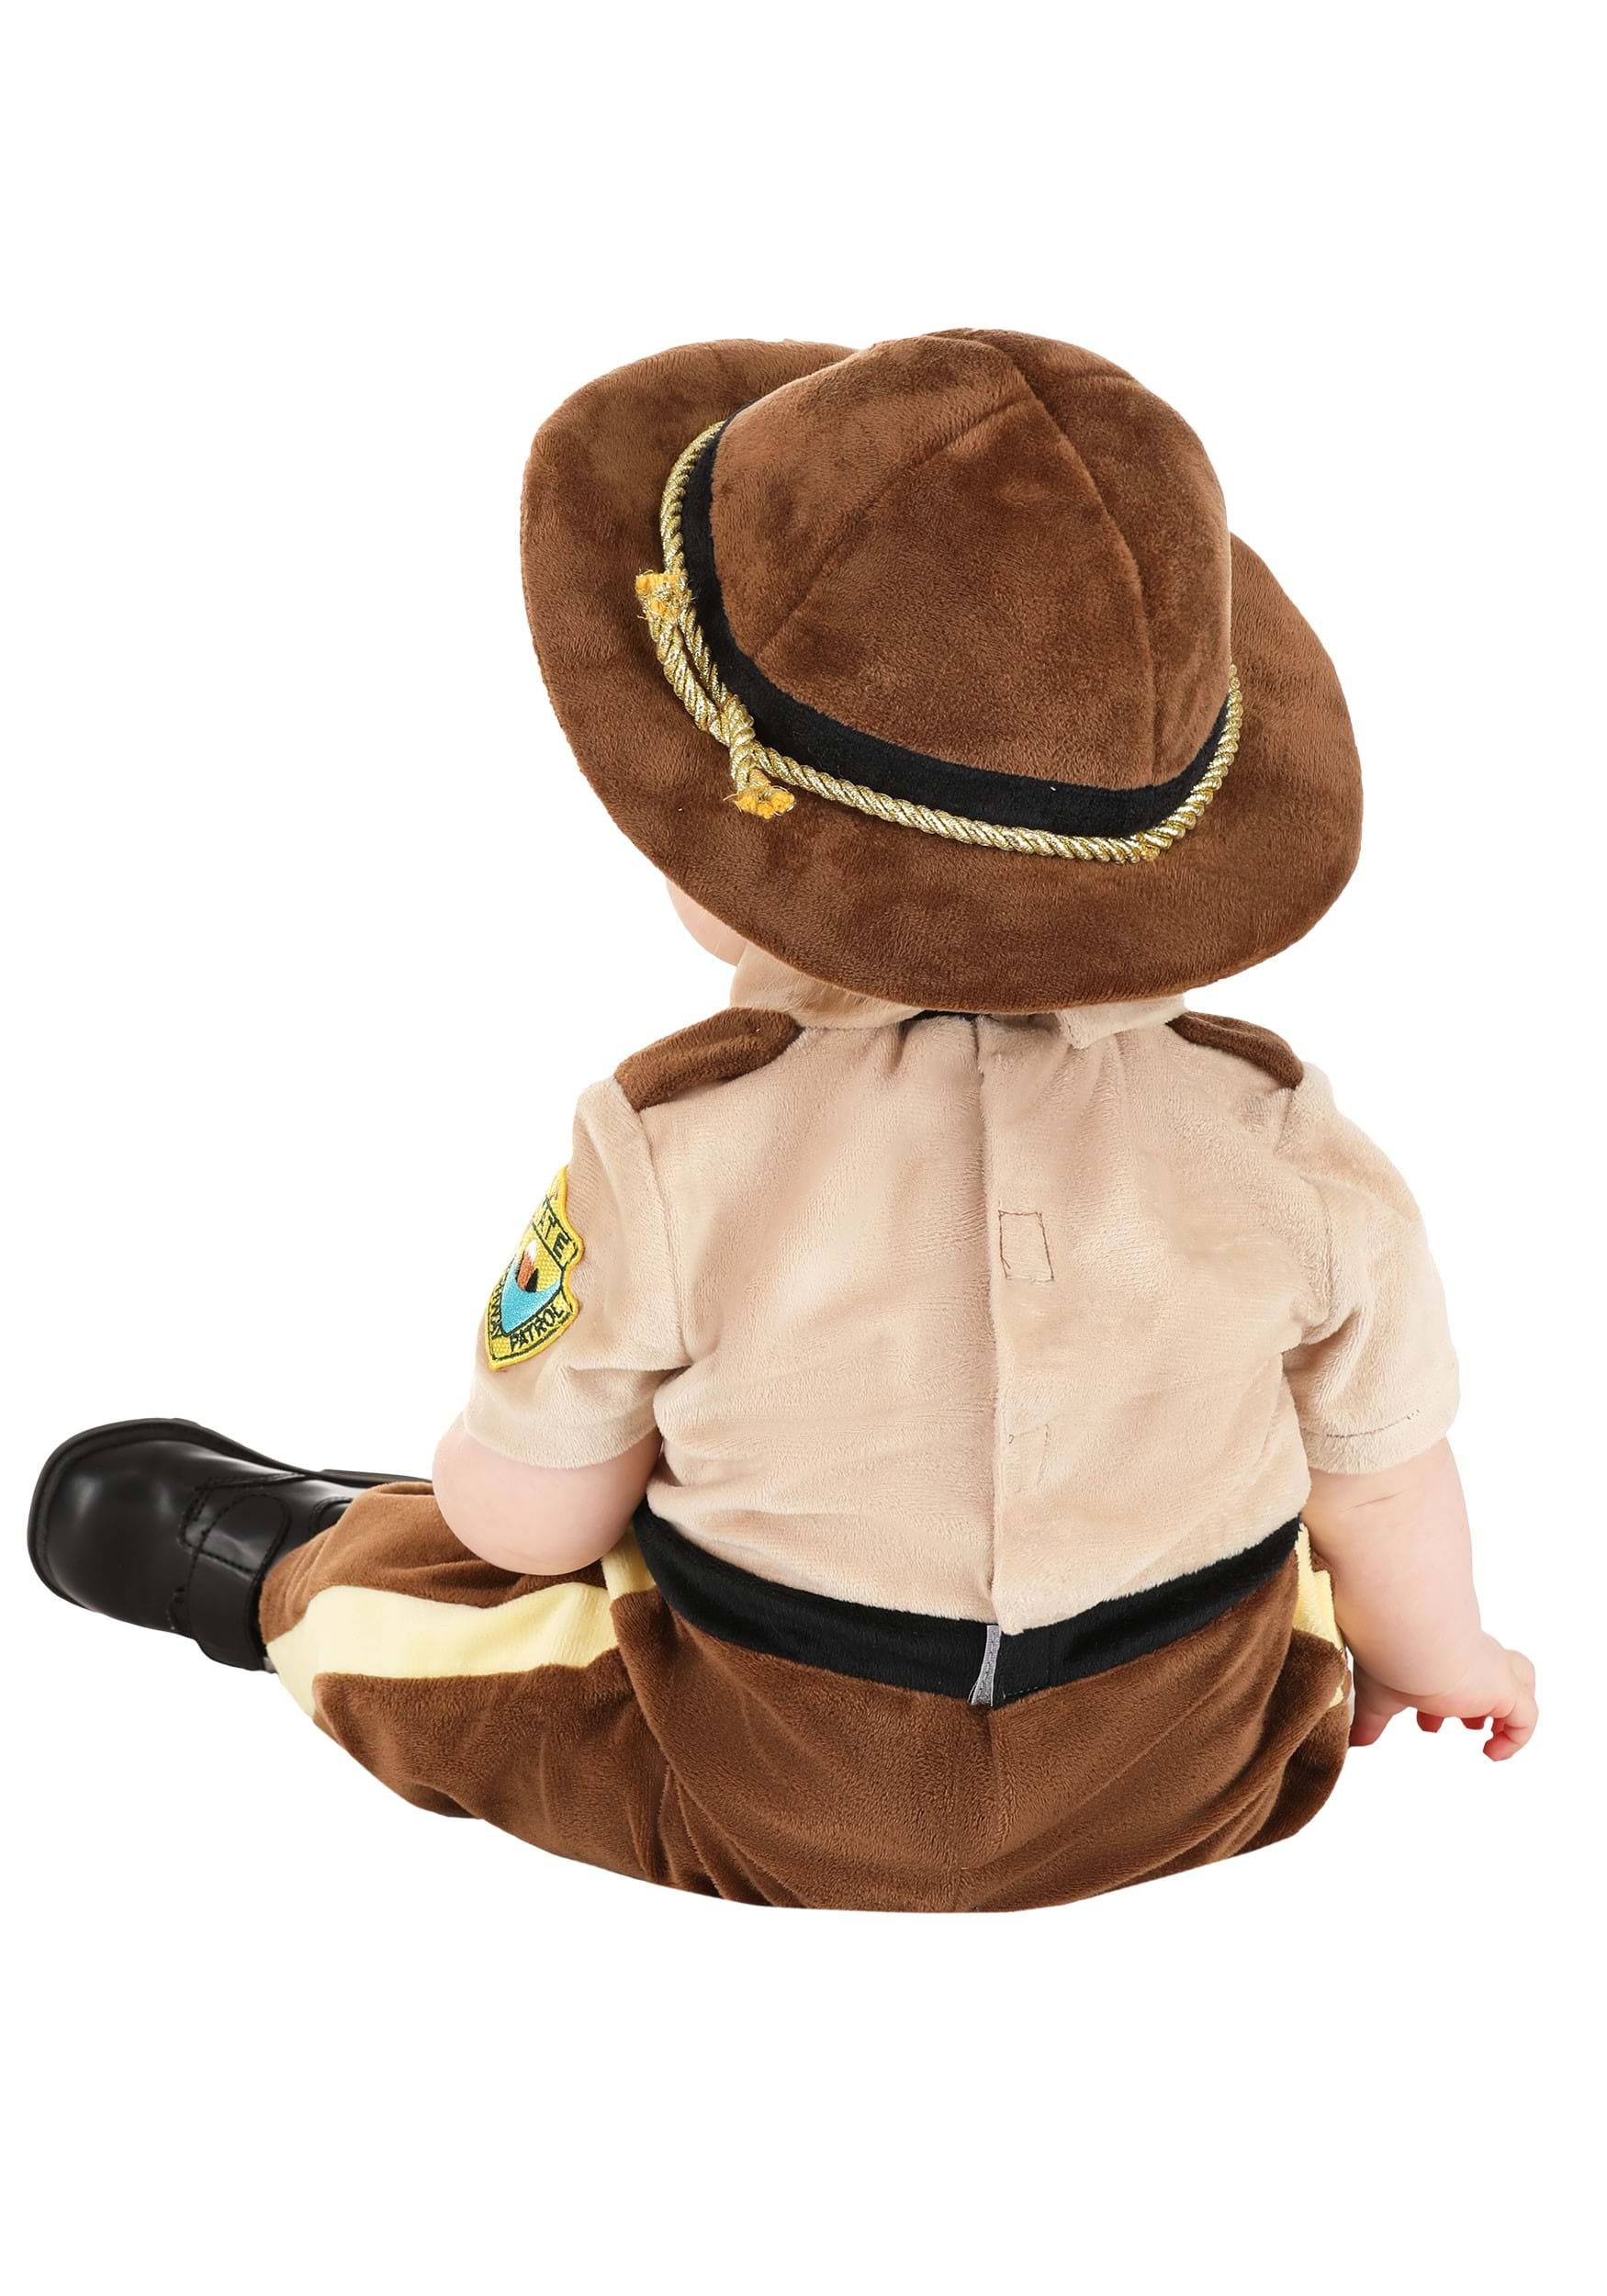 Super Troopers Infant Costume